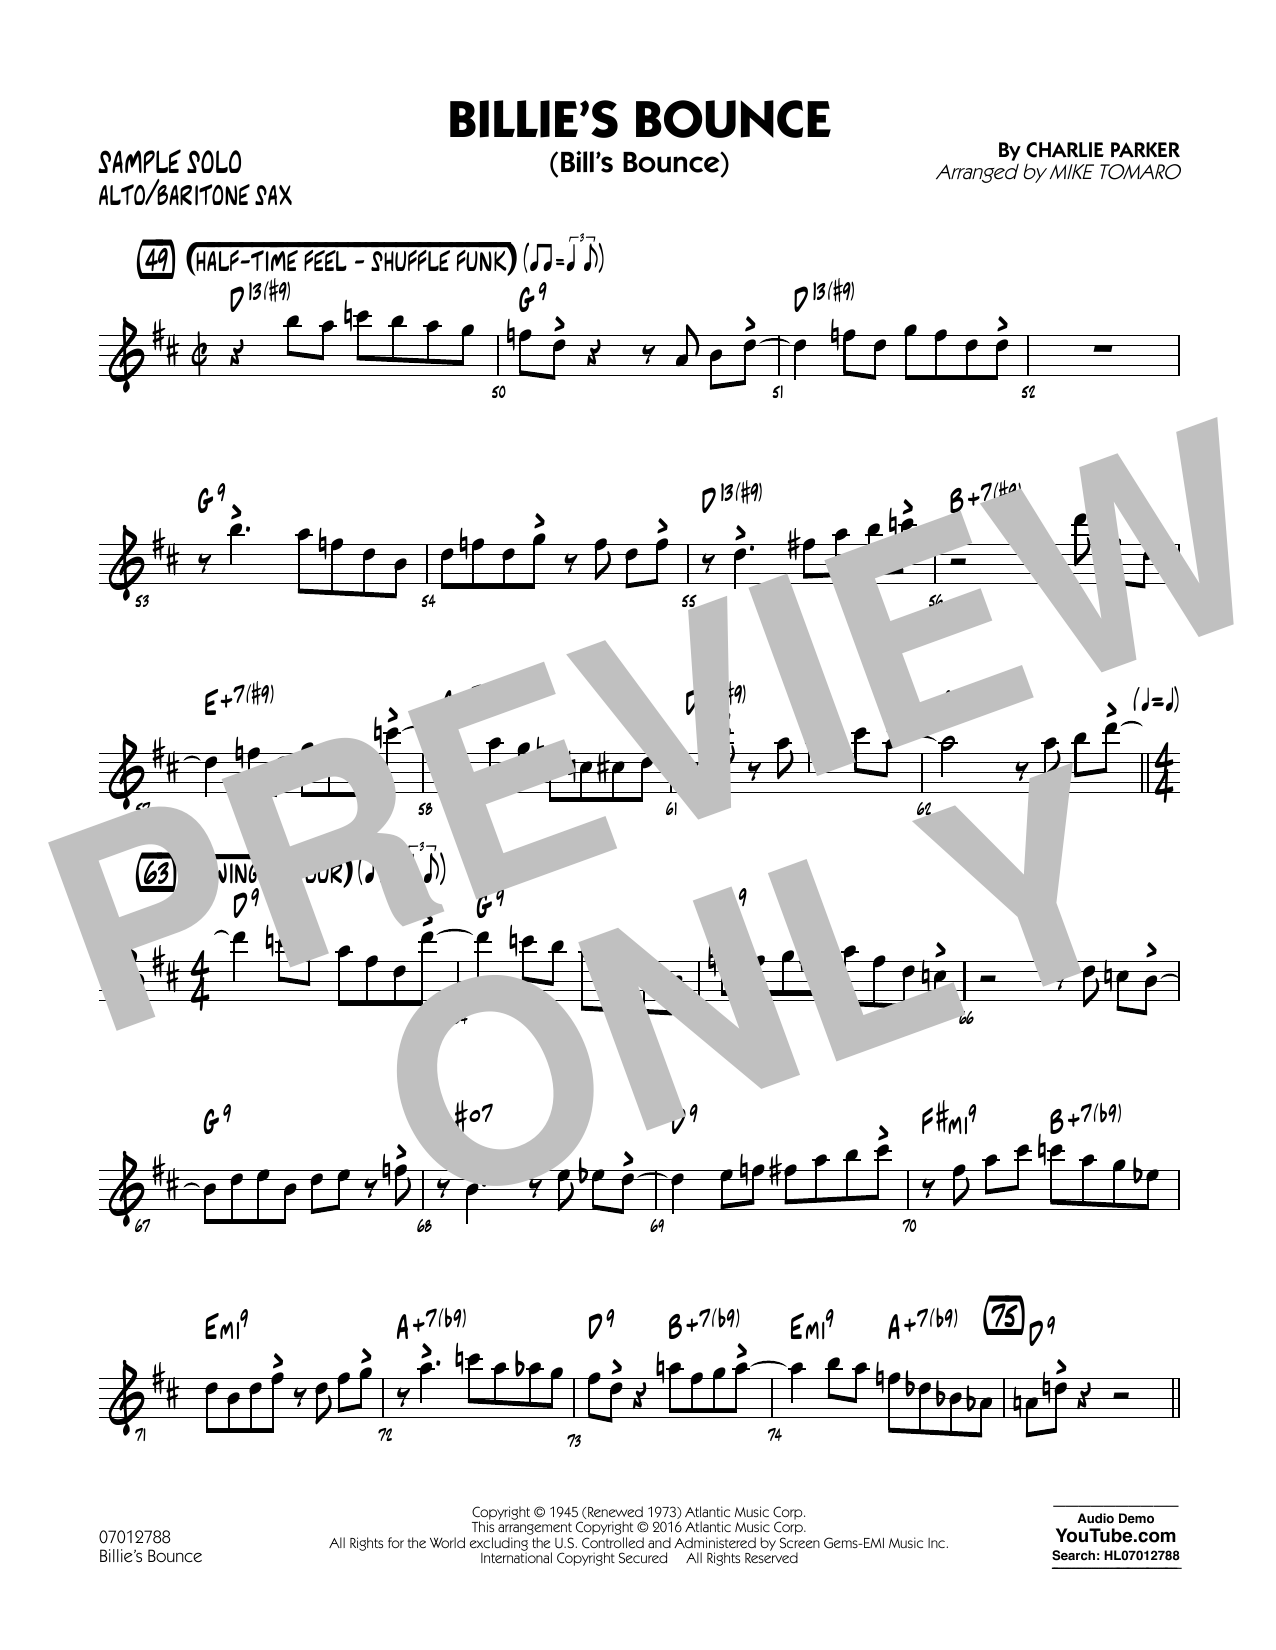 Mike Tomaro Billie's Bounce - Alto Sax/Bari Sax Sample Solo Sheet Music Notes & Chords for Jazz Ensemble - Download or Print PDF